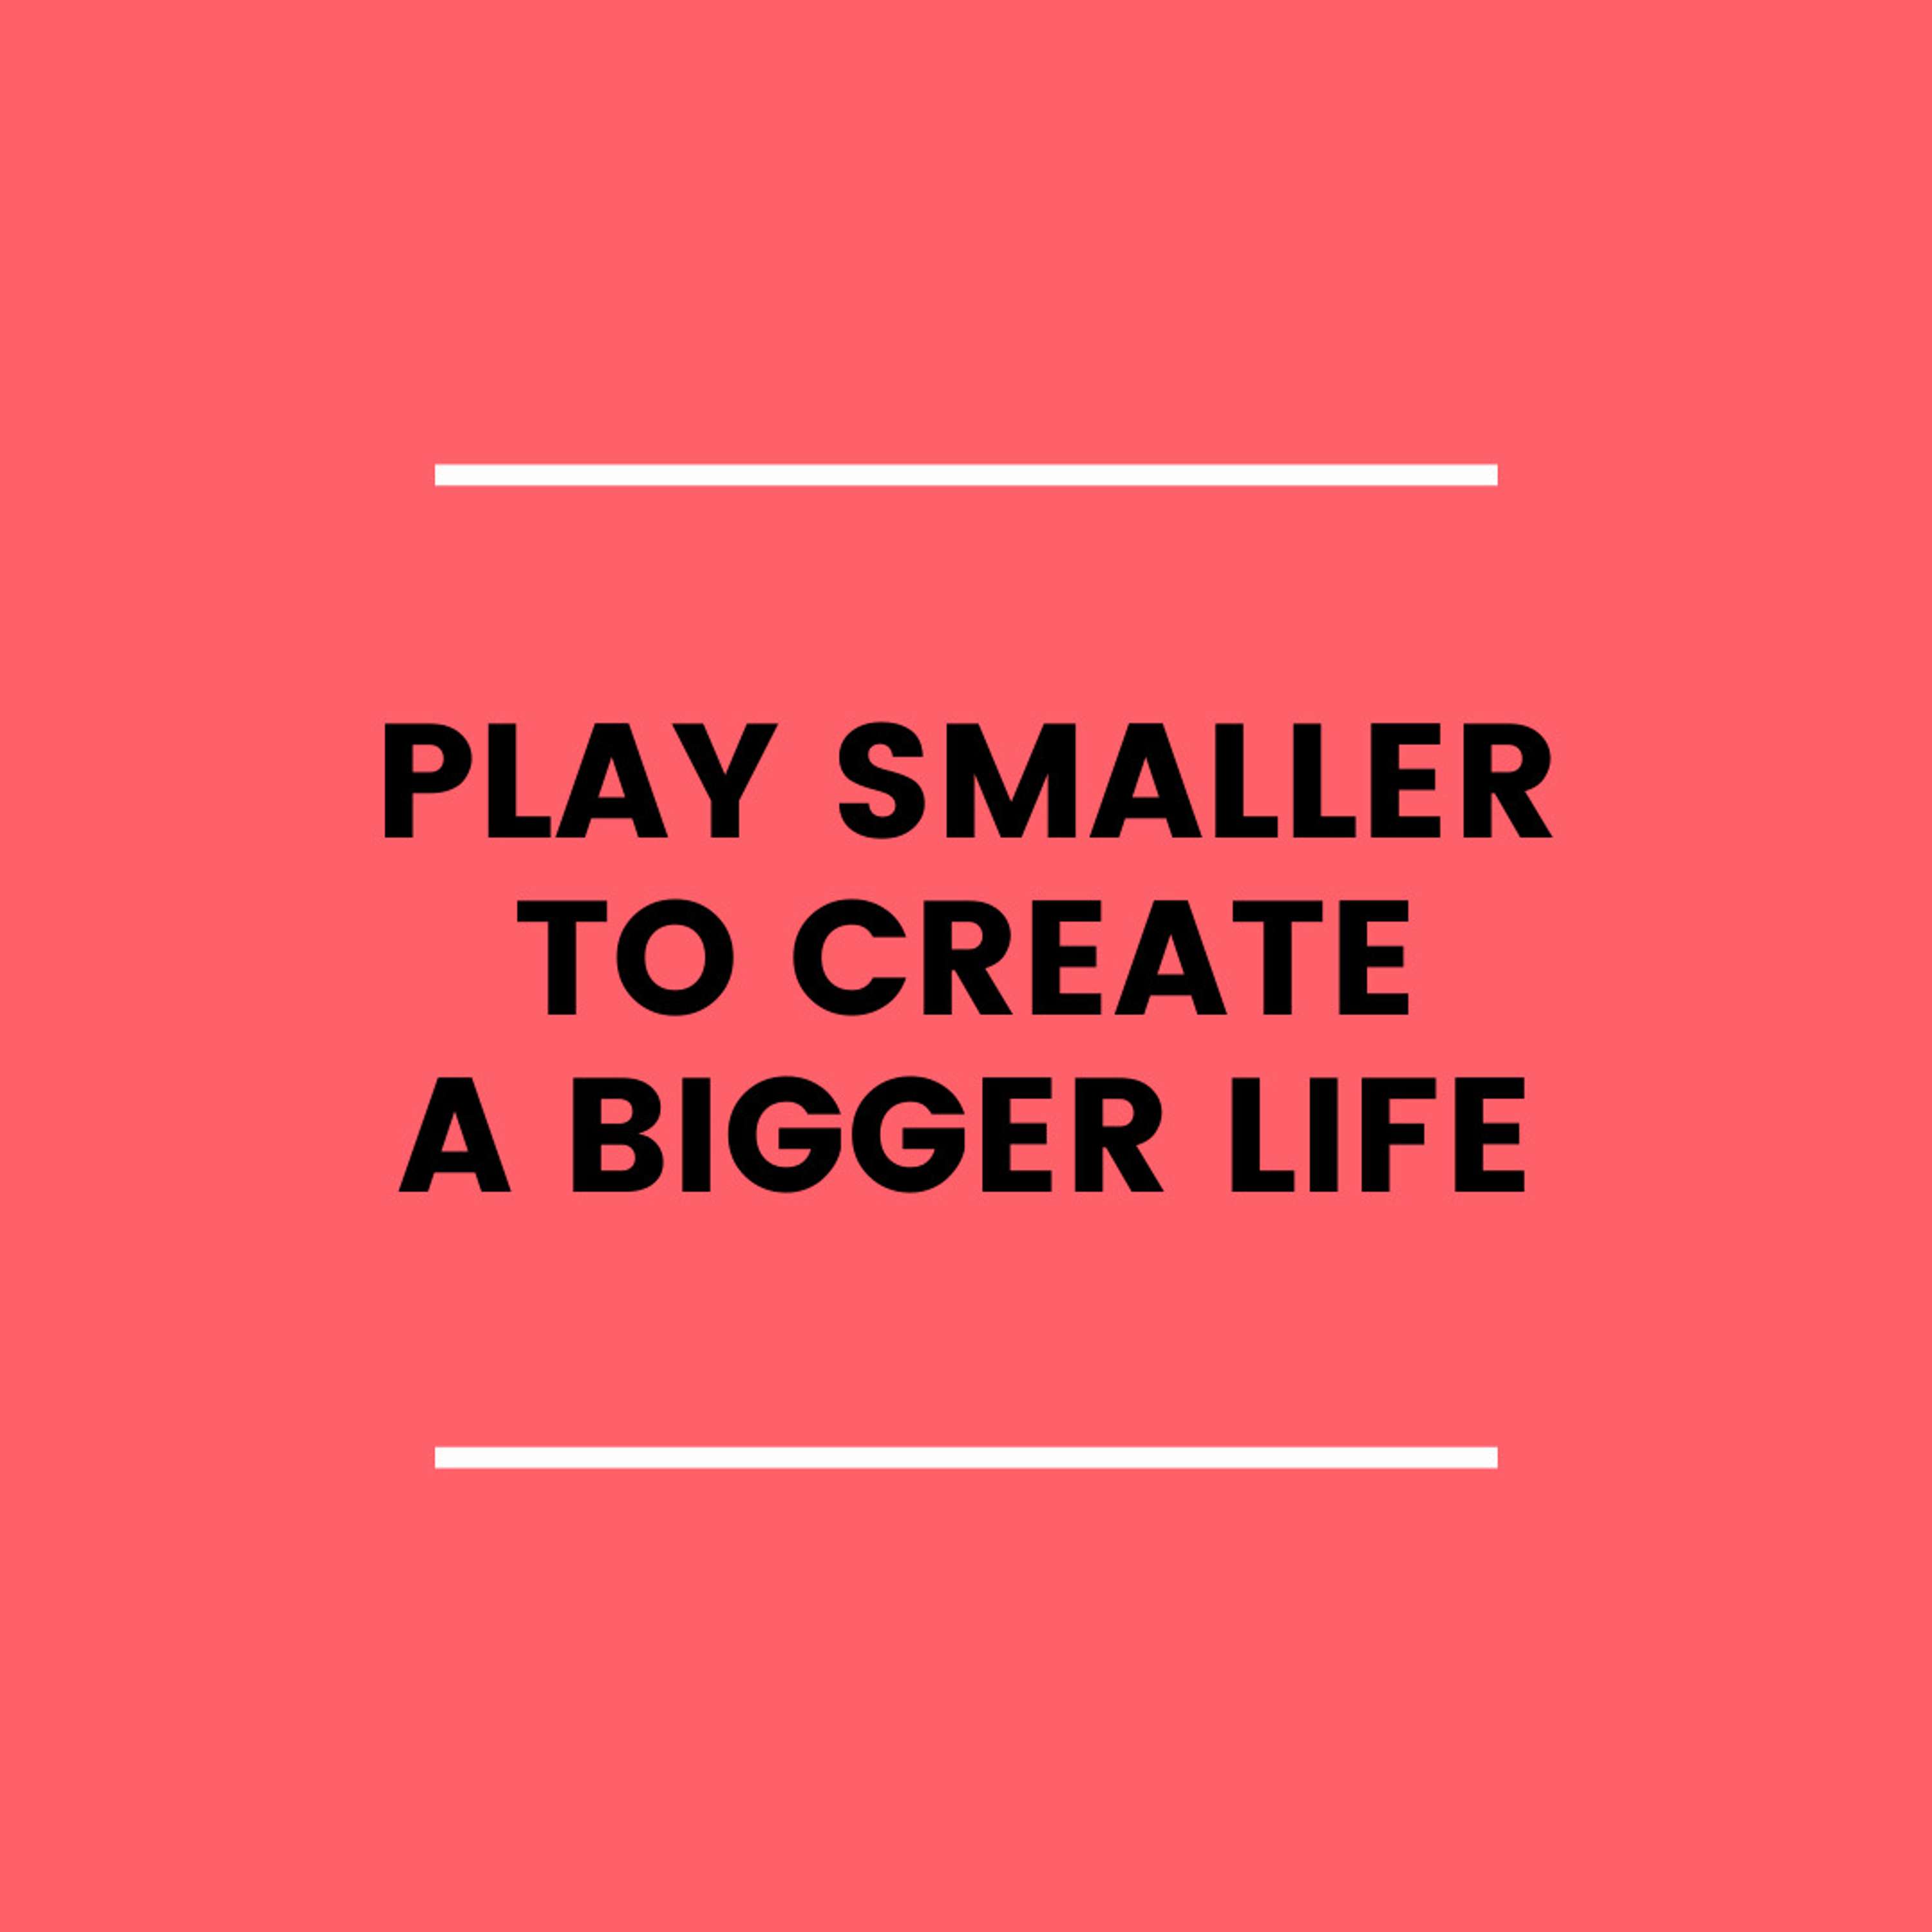 17. Play Smaller to Create a Bigger Life?